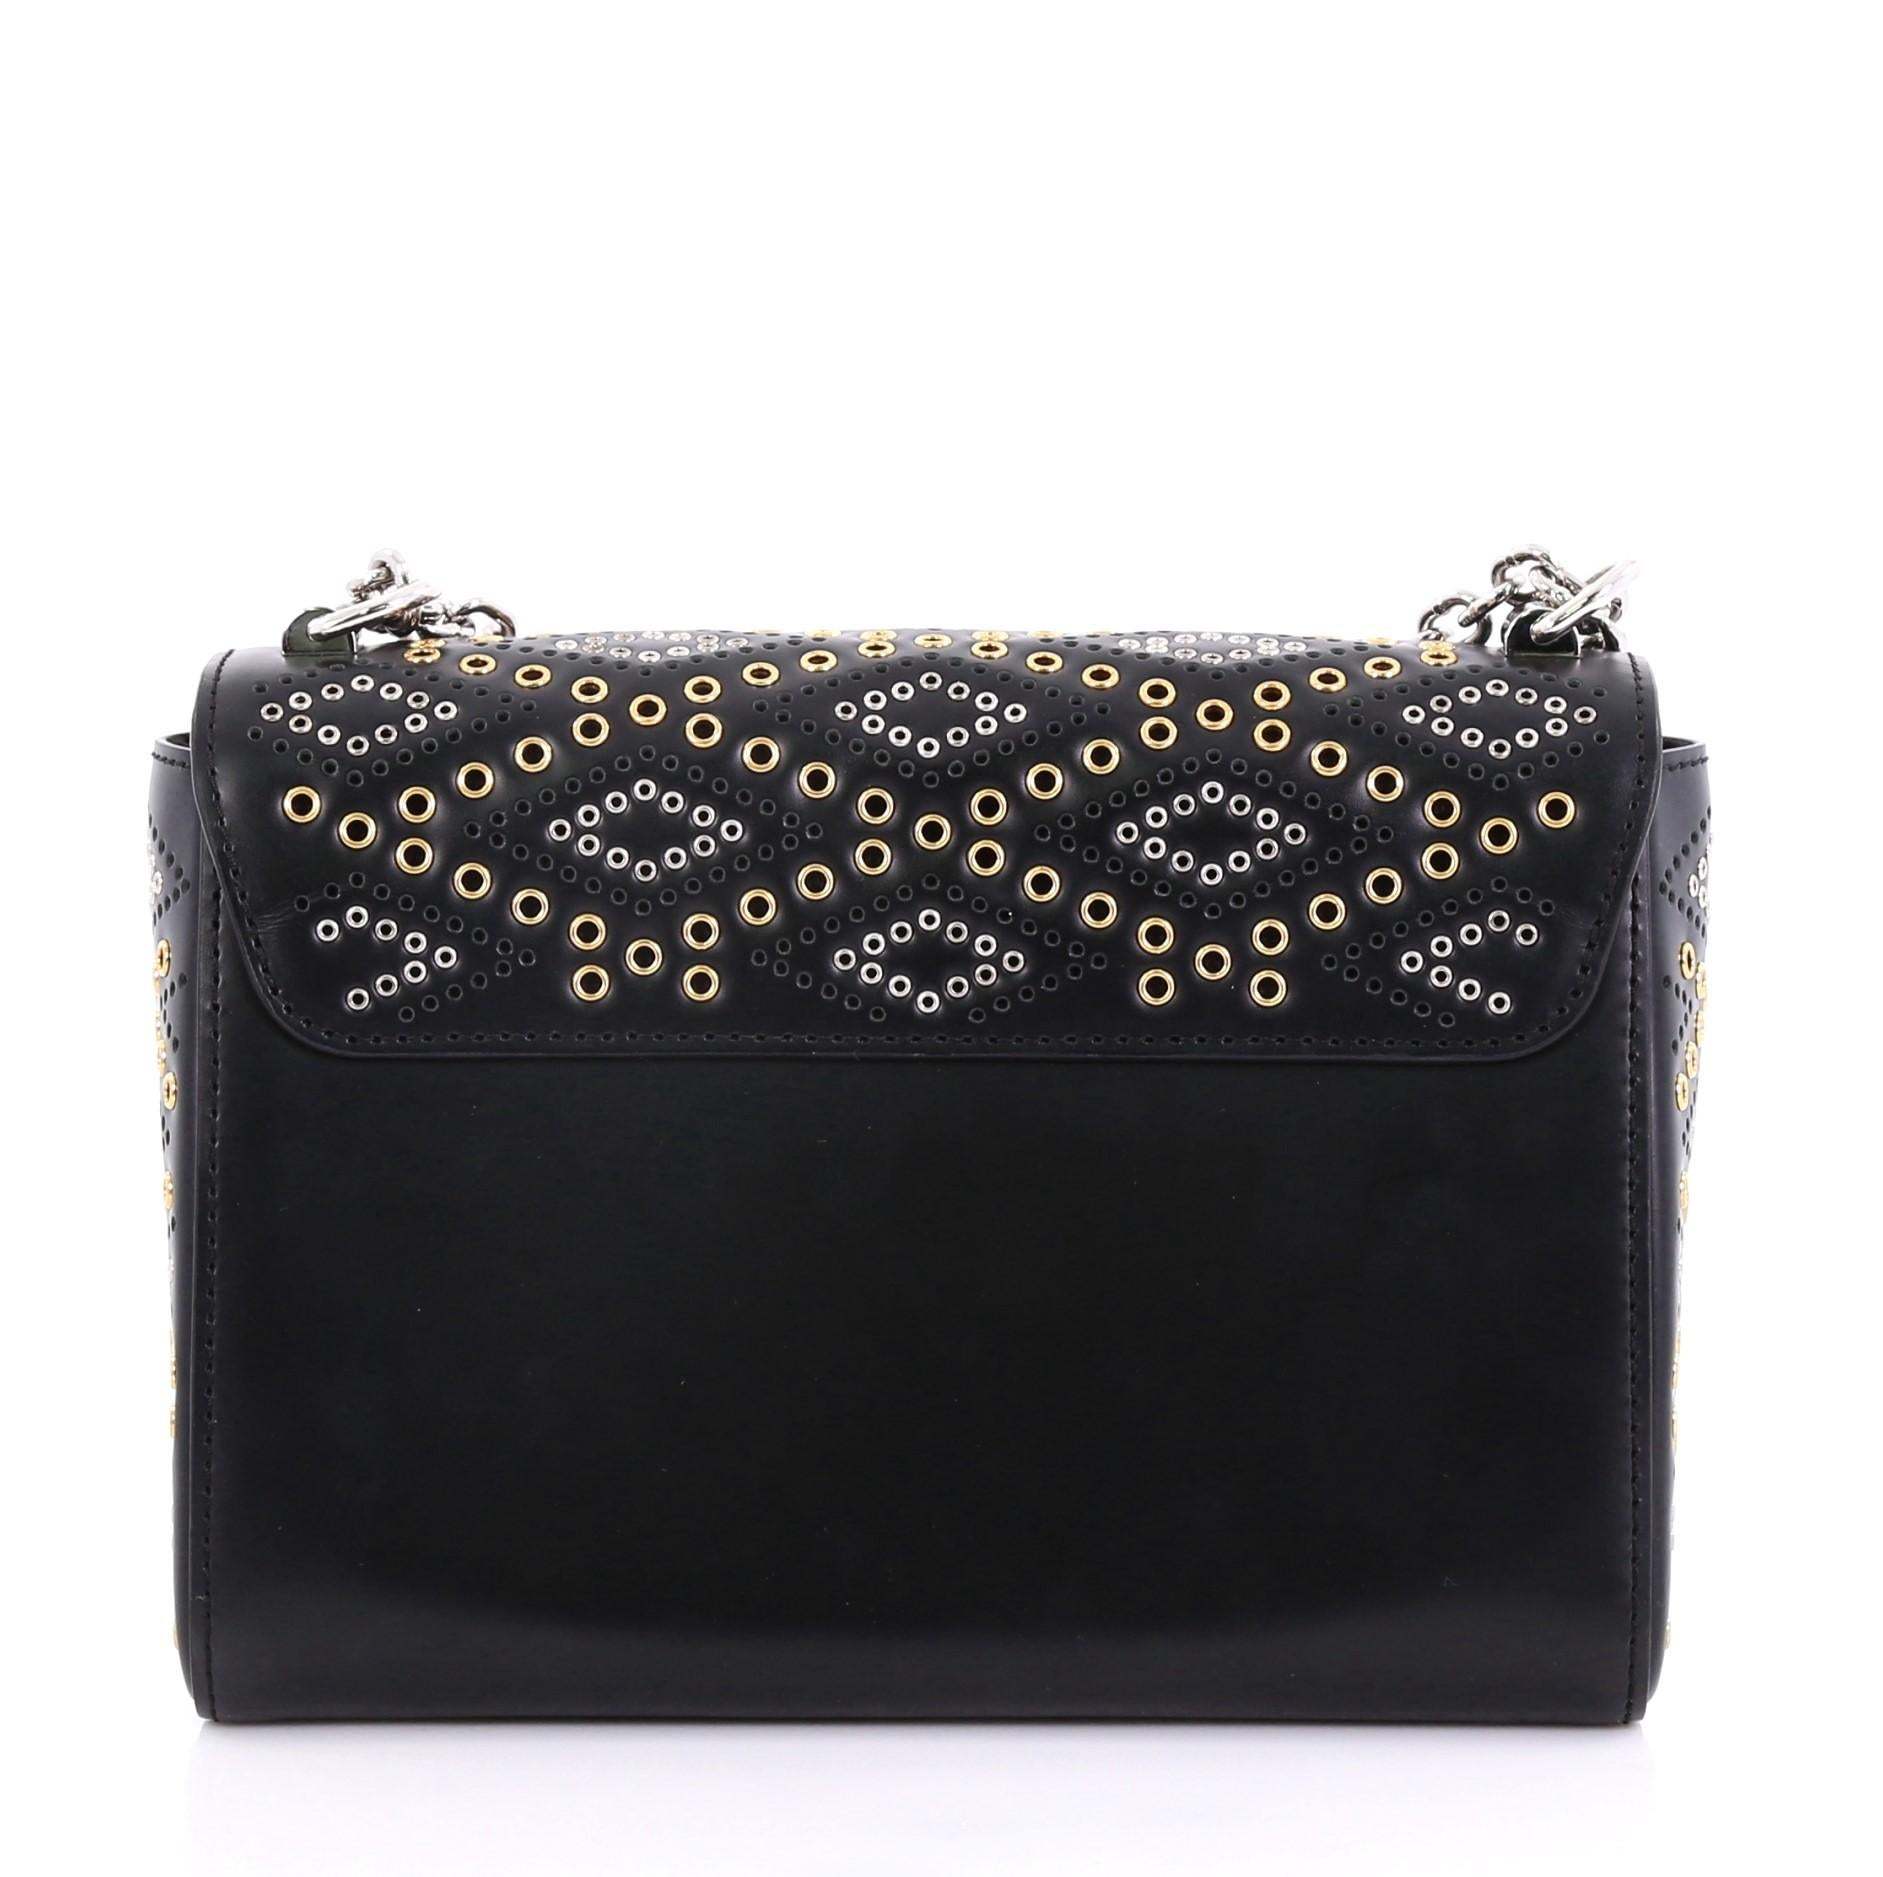 Black Louis Vuitton Twist Handbag Limited Edition Grommet Embellished Leather MM